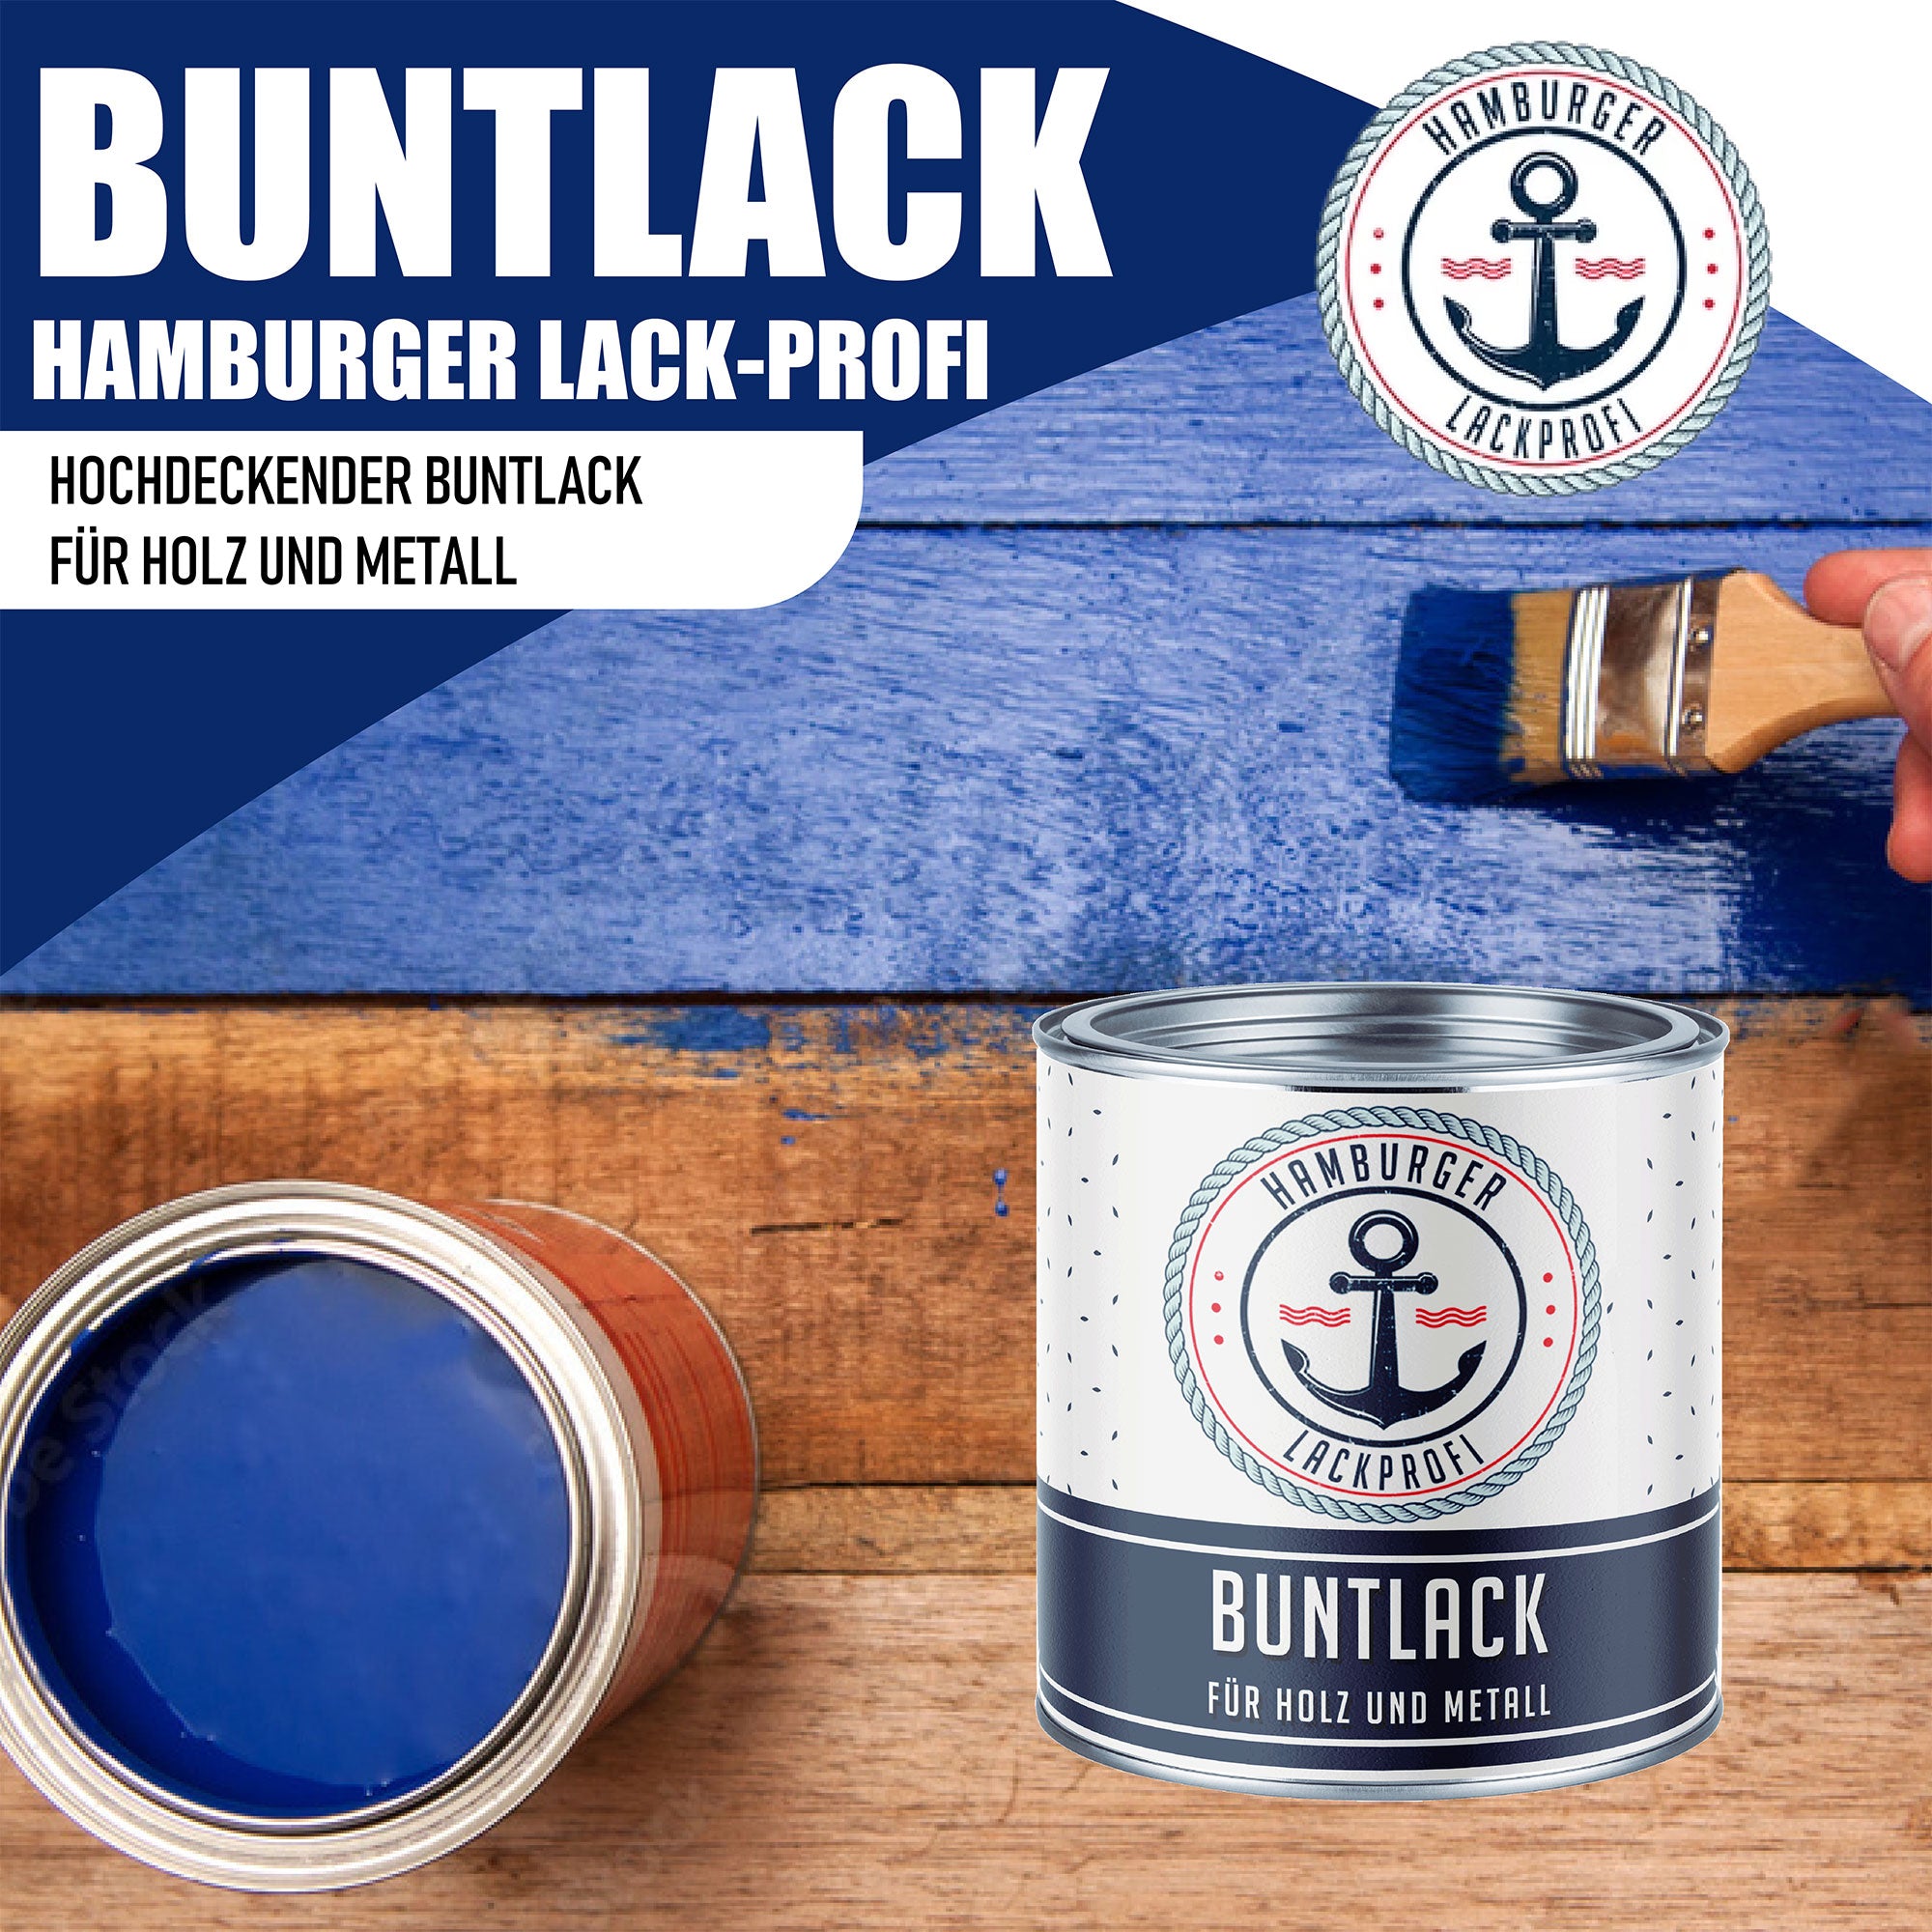 Hamburger Lack-Profi Buntlack in Umbragrau RAL 7022 mit Lackierset (X300) & Verdünnung (1 L) - 30% Sparangebot